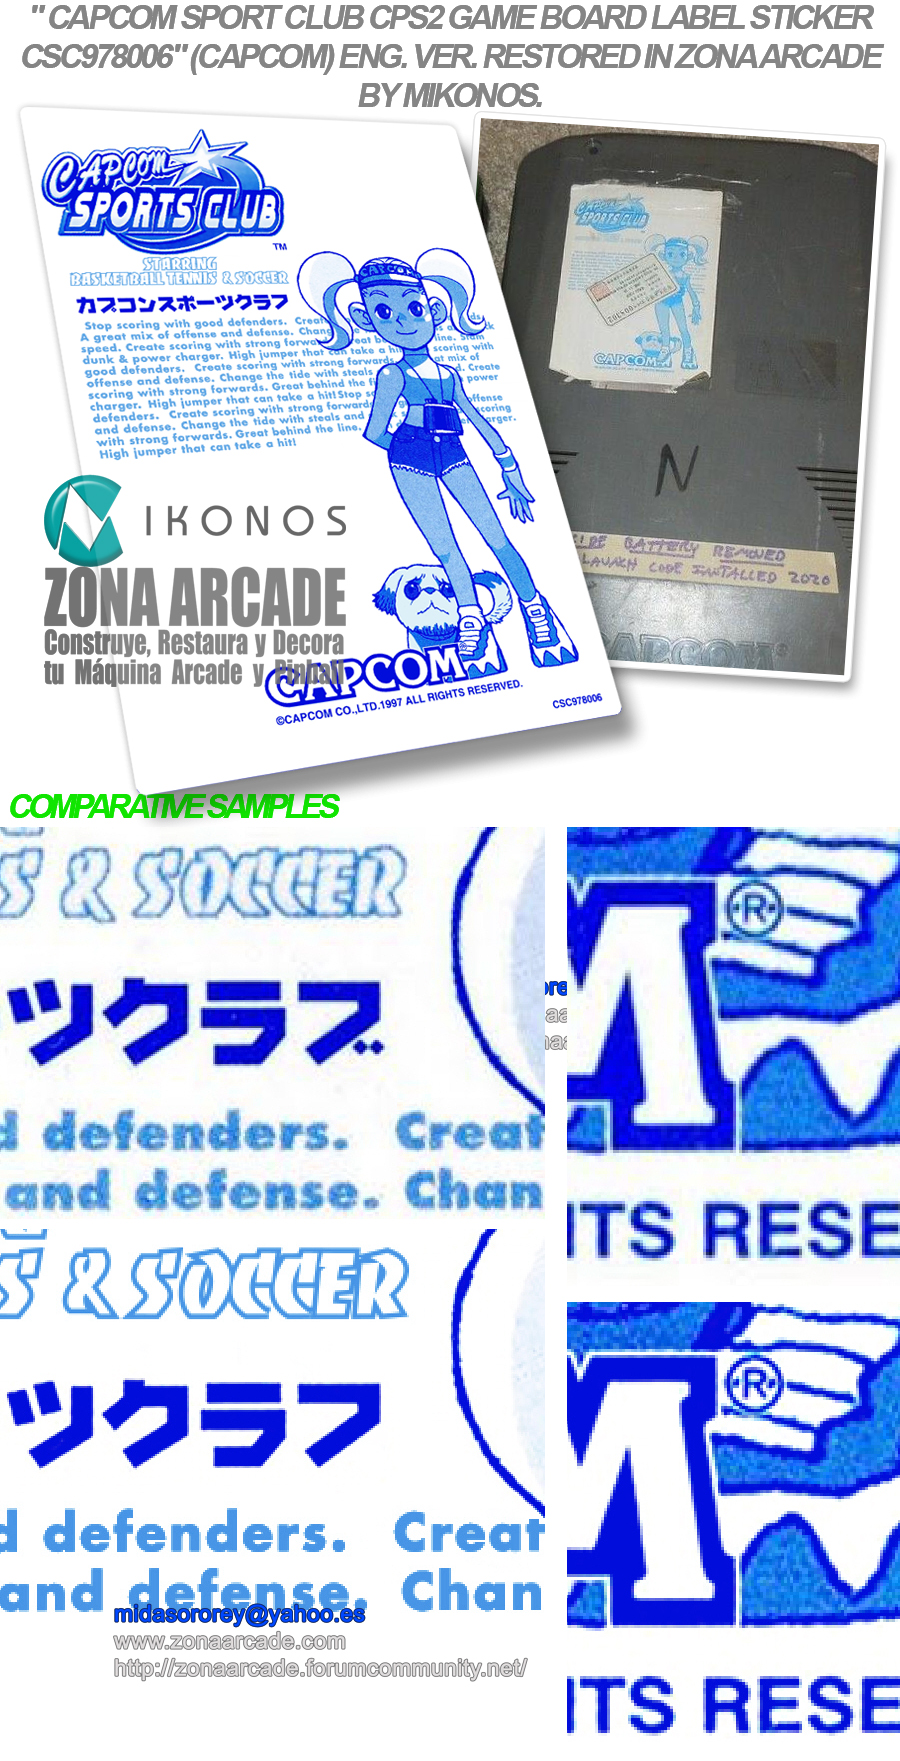 Capcom-Sport-Club-CPS2-Game-Board-Label-Sticker-CSC978006-Restored-Mikonos1